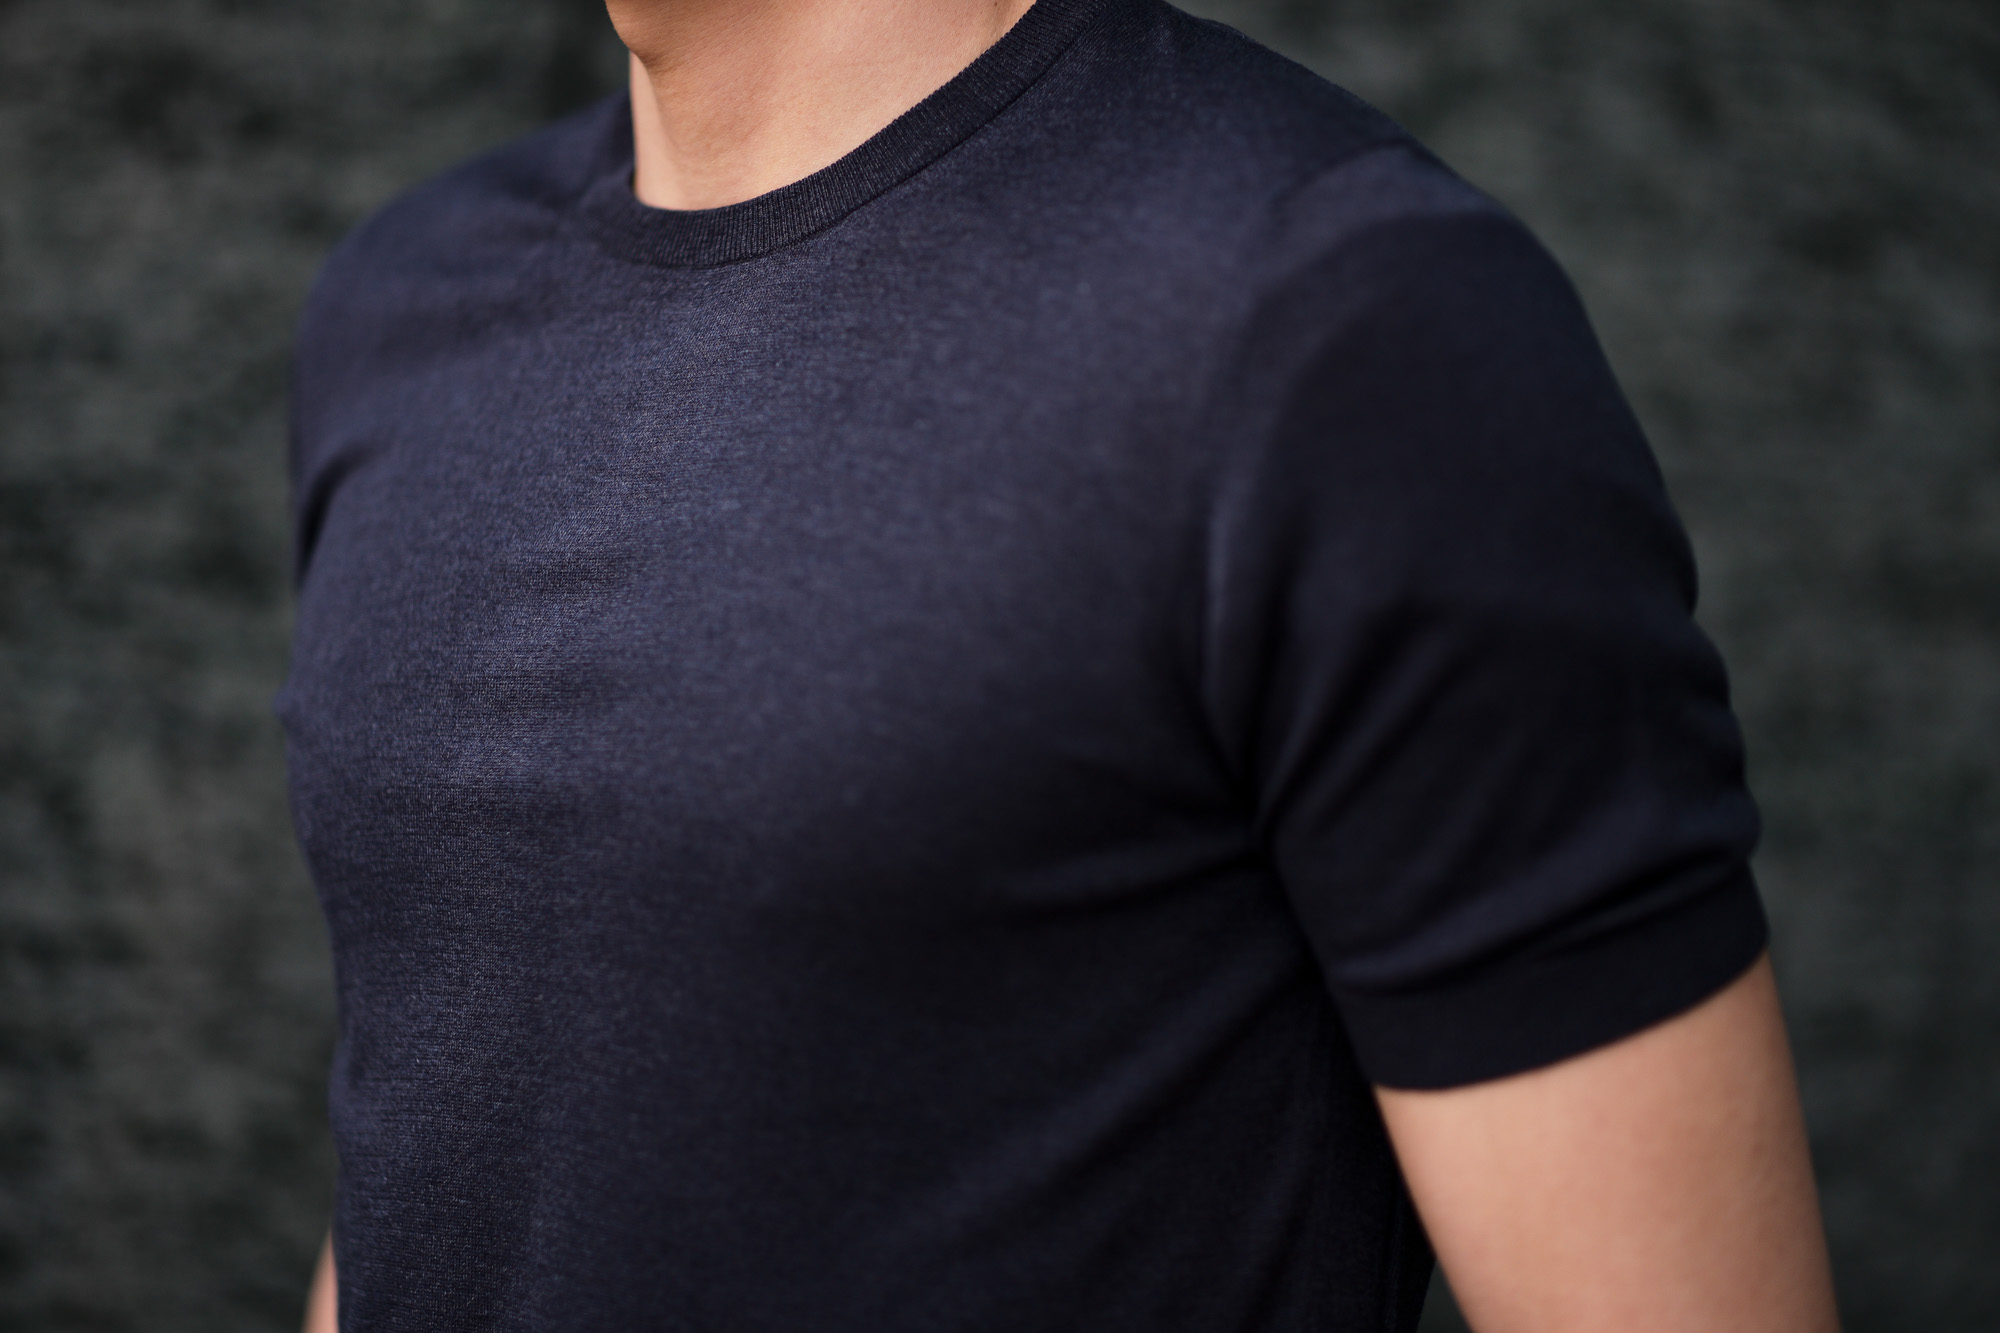 Gran Sasso (グランサッソ) Silk Knit T-shirt (シルクニット Tシャツ) SETA (シルク 100%) ショートスリーブ シルク ニット Tシャツ NAVY (ネイビー・597) made in italy (イタリア製) 2020 春夏新作  gransasso 愛知 名古屋 altoediritto アルトエデリット